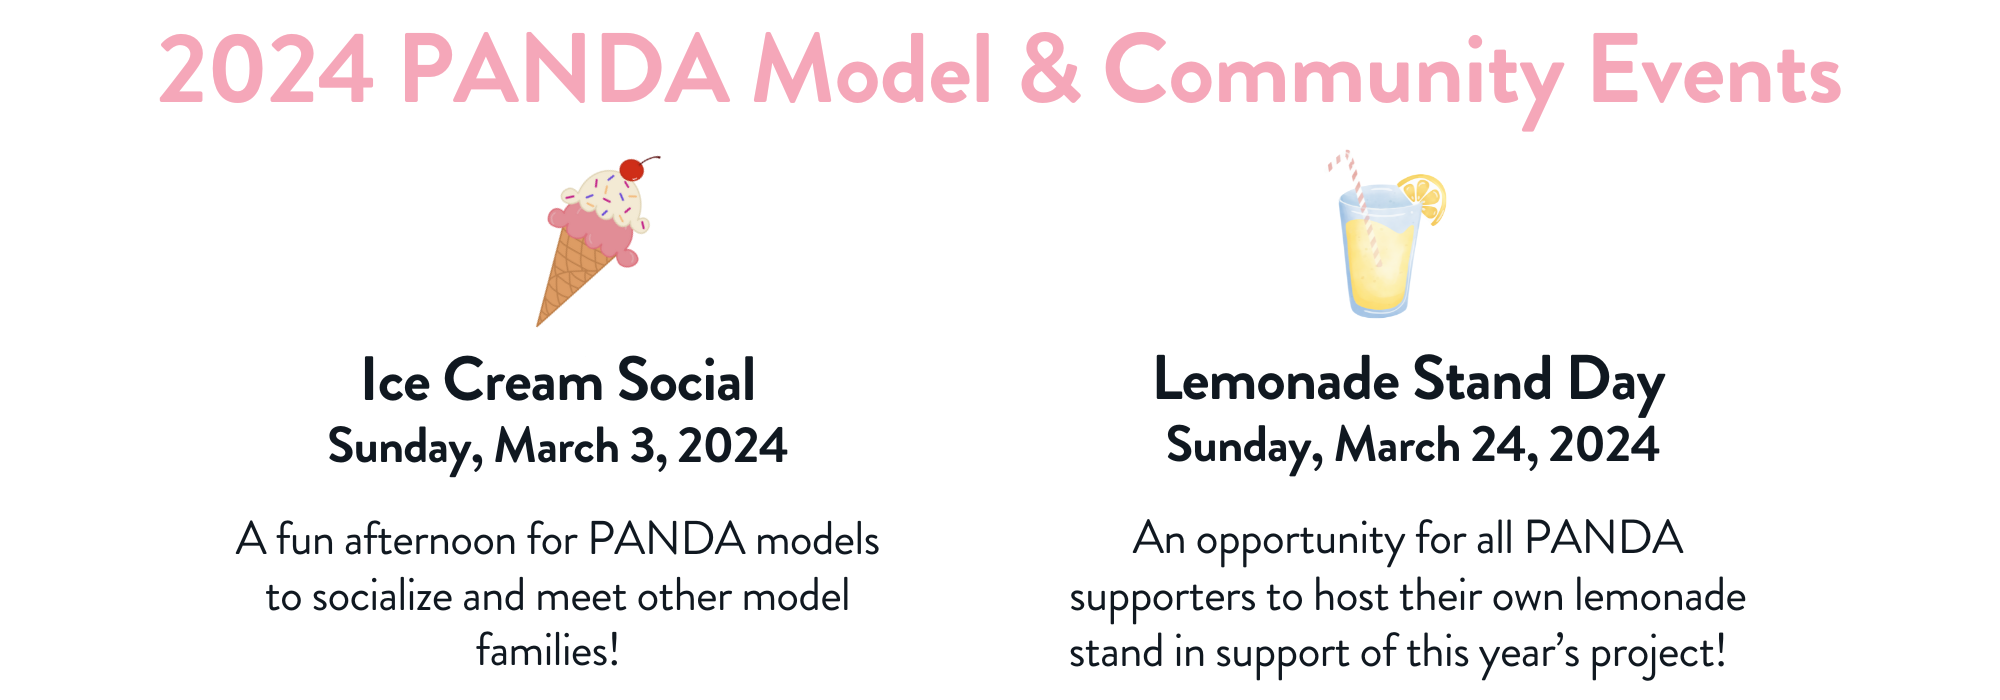 2024 panda model community events